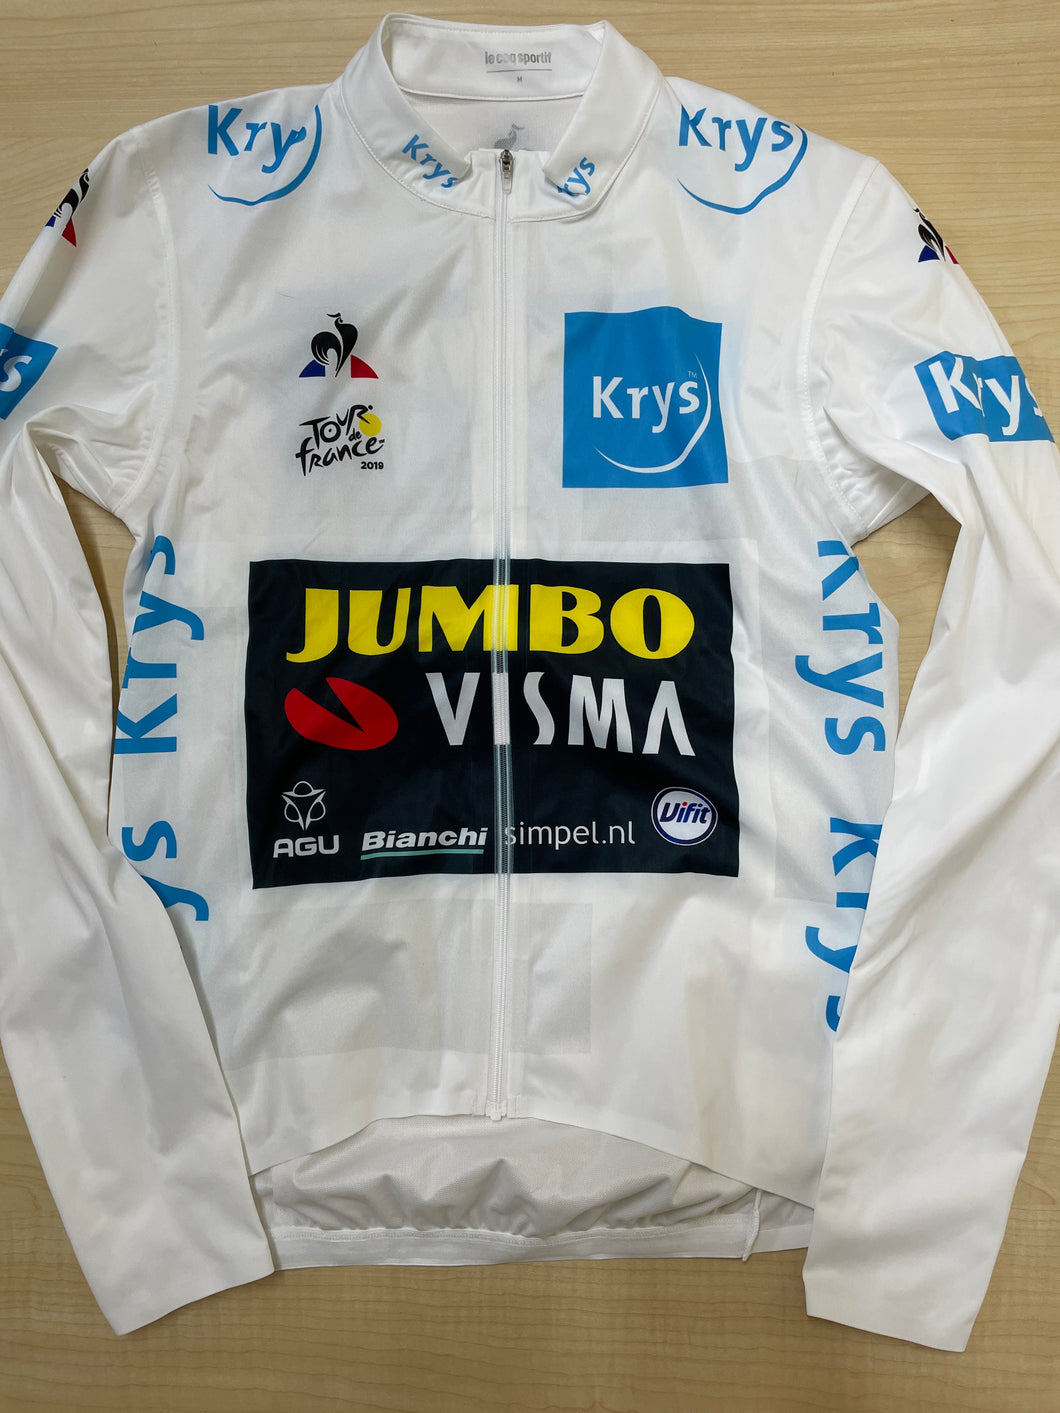 Team Jumbo Visma | Tour de France 2019 | White Leader Jersey LS | Wout van Aert | M